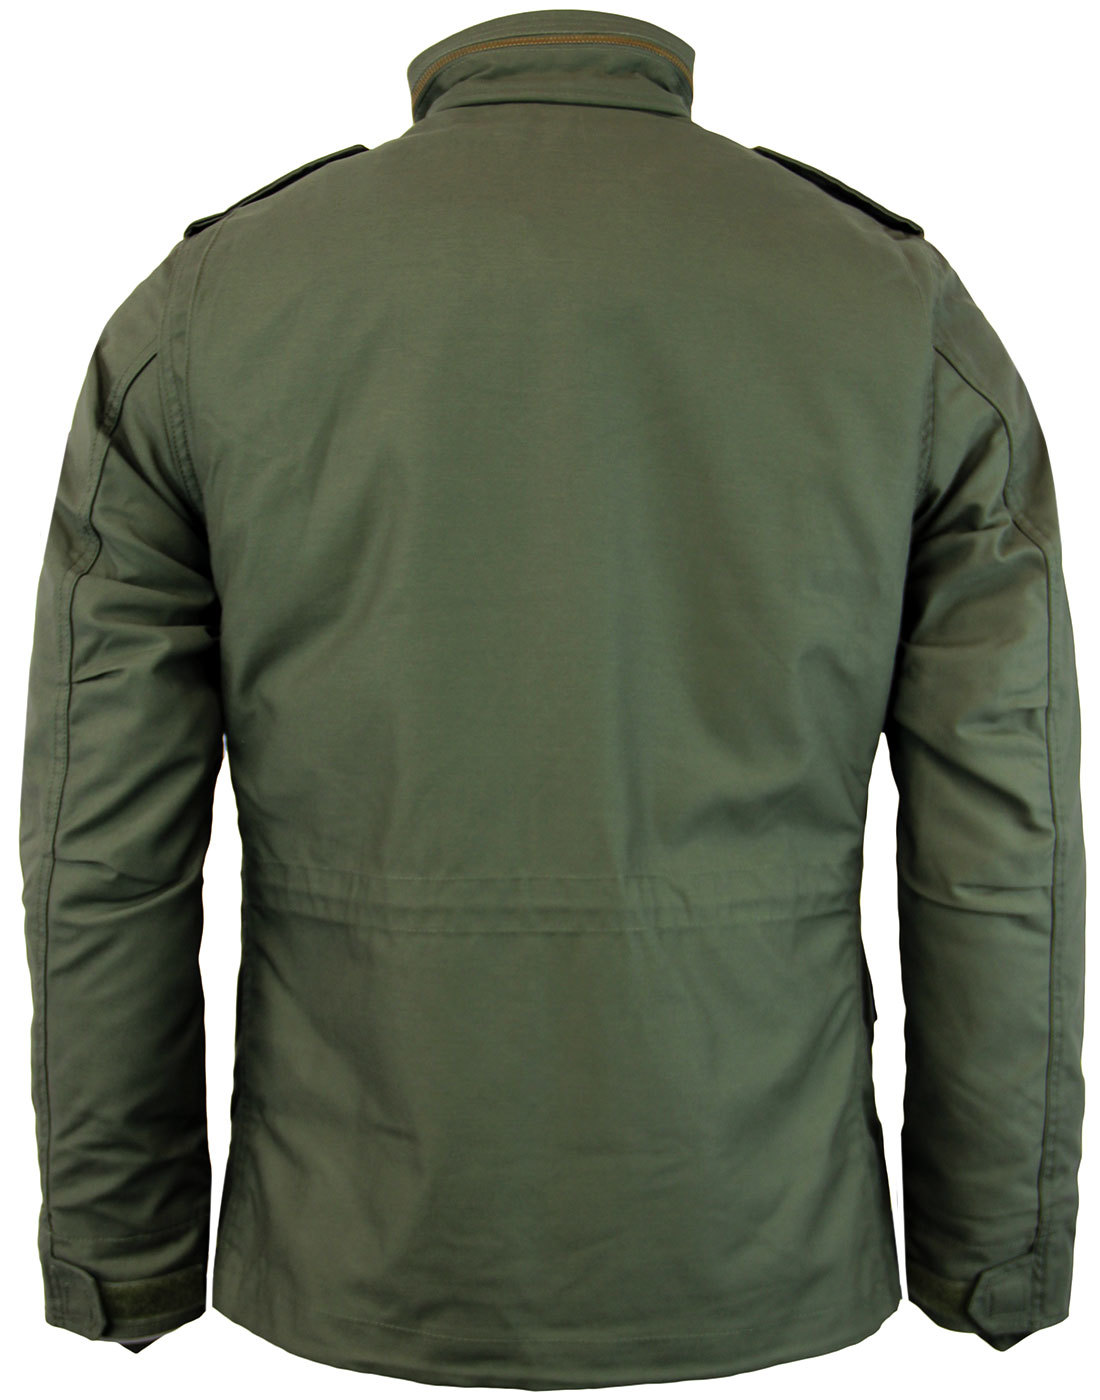 ALPHA INDUSTRIES M-65 Heritage Retro Mod Field Jacket in Olive